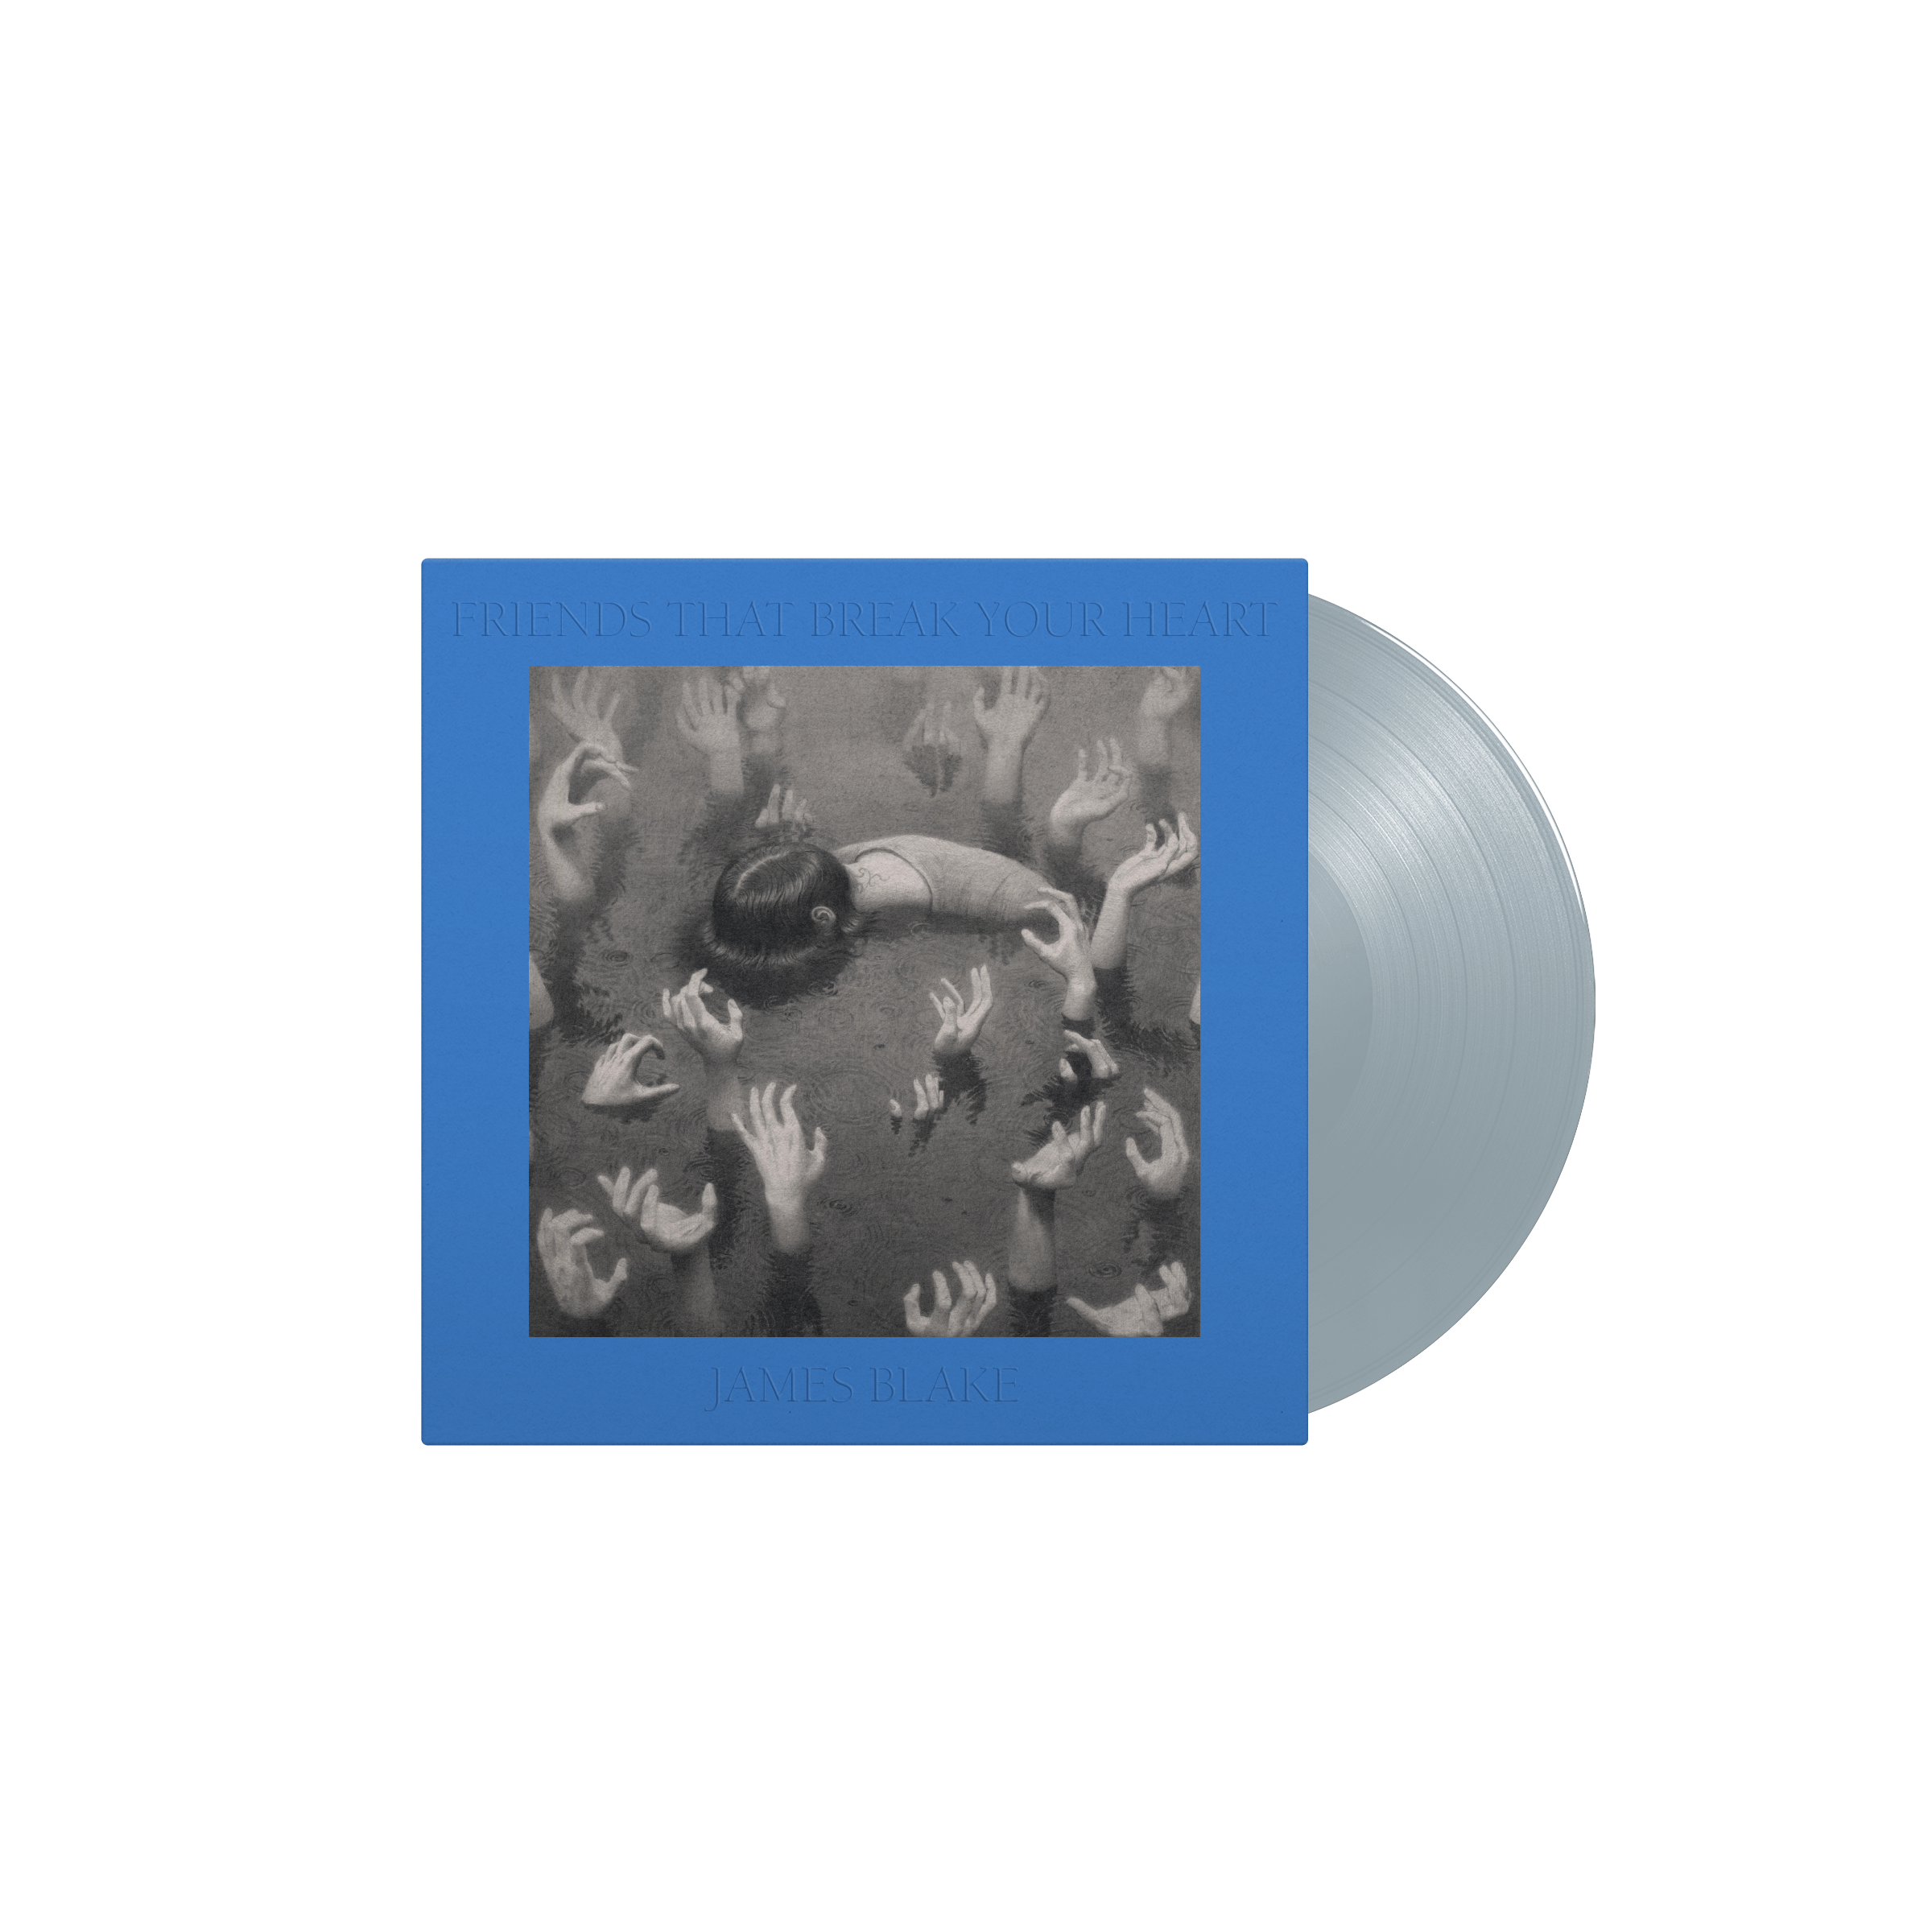 James Blake - Friends That Break Your Heart: Limited Silver Vinyl LP